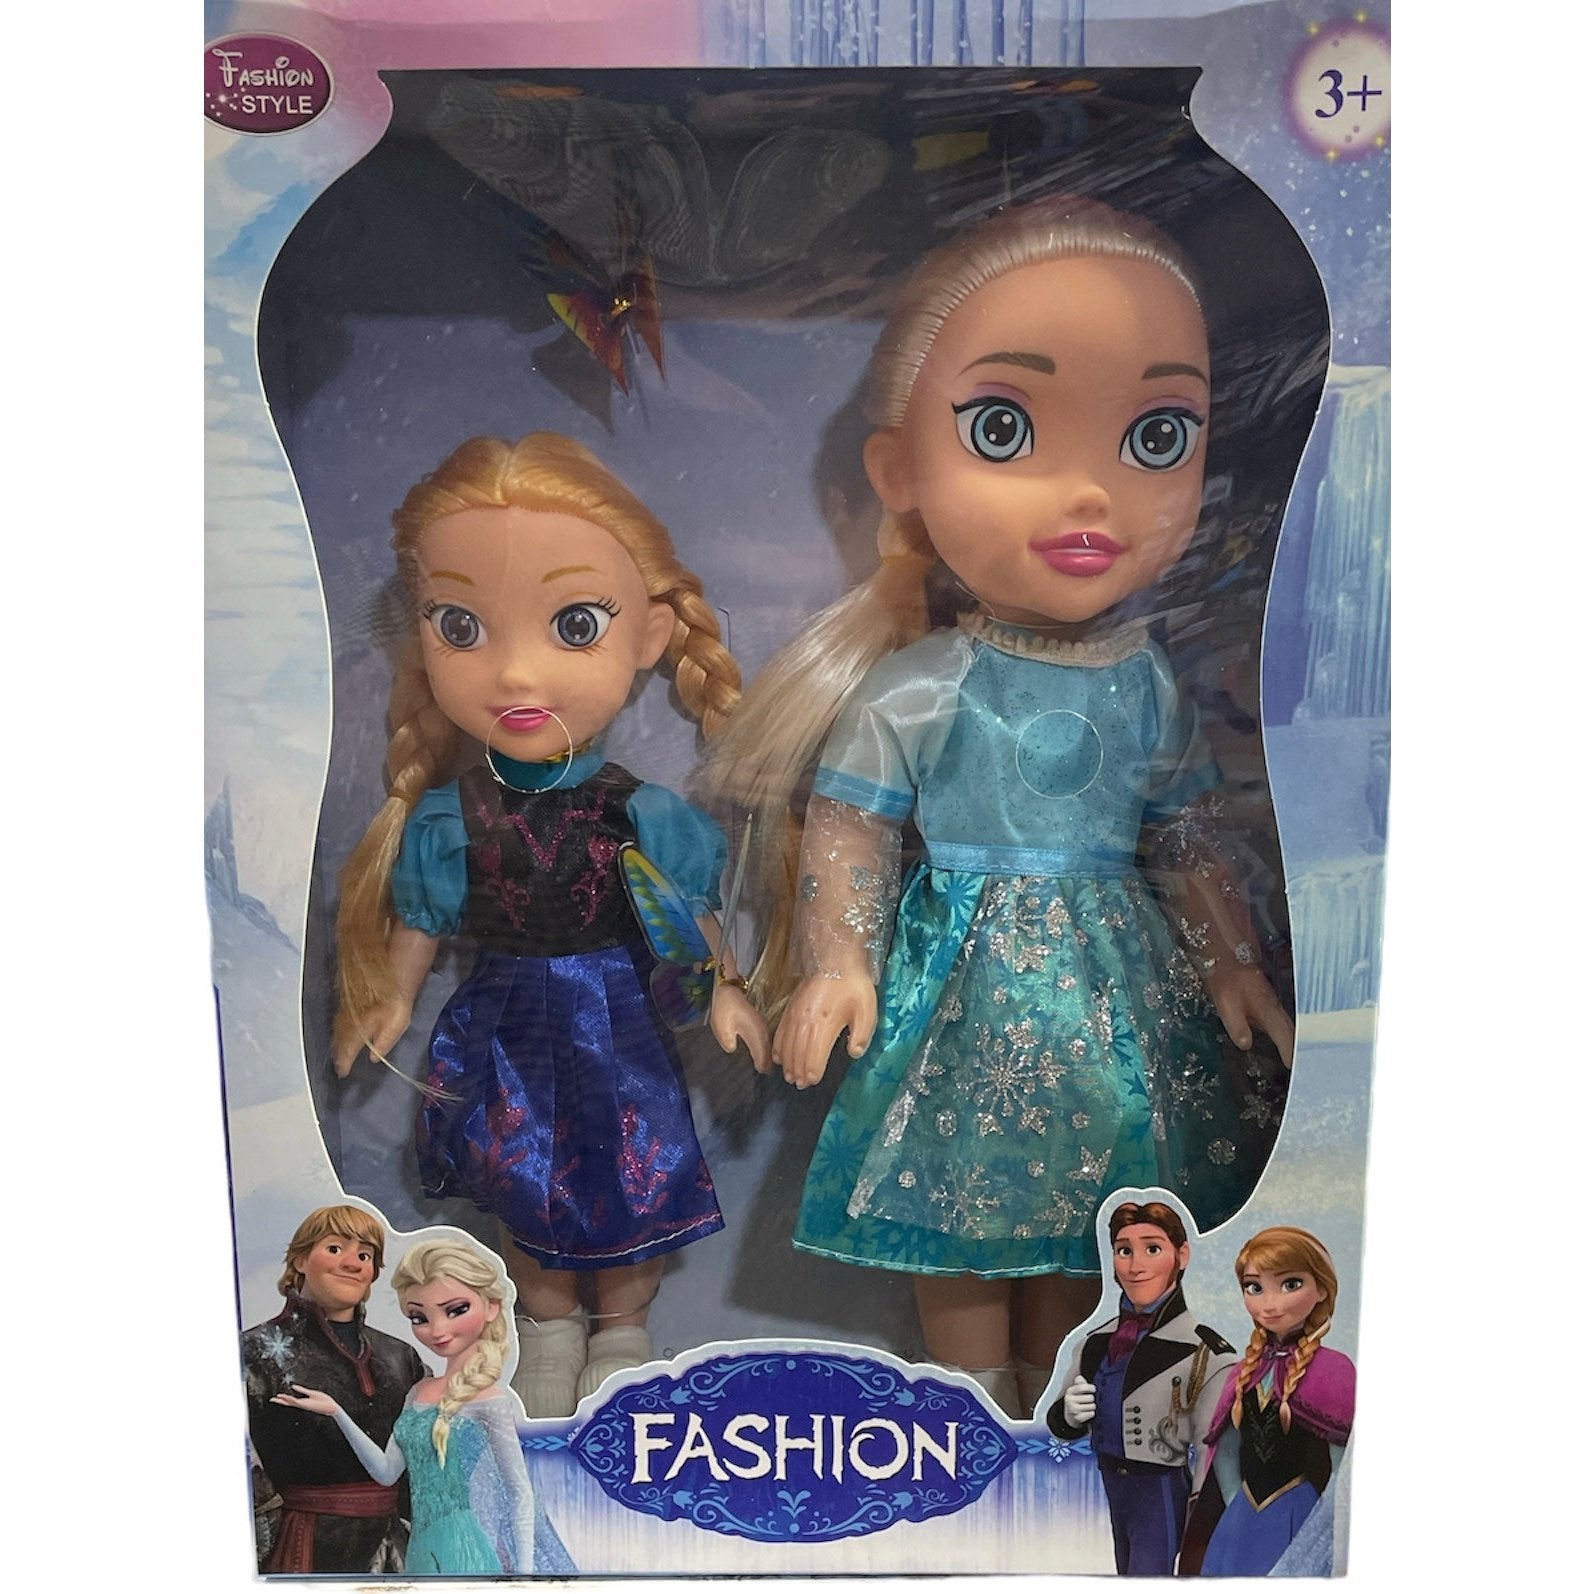 Frozen Fashion  Elsa and Anna Fashion Doll Gifts for Kids 1851 - kidzbuzzz